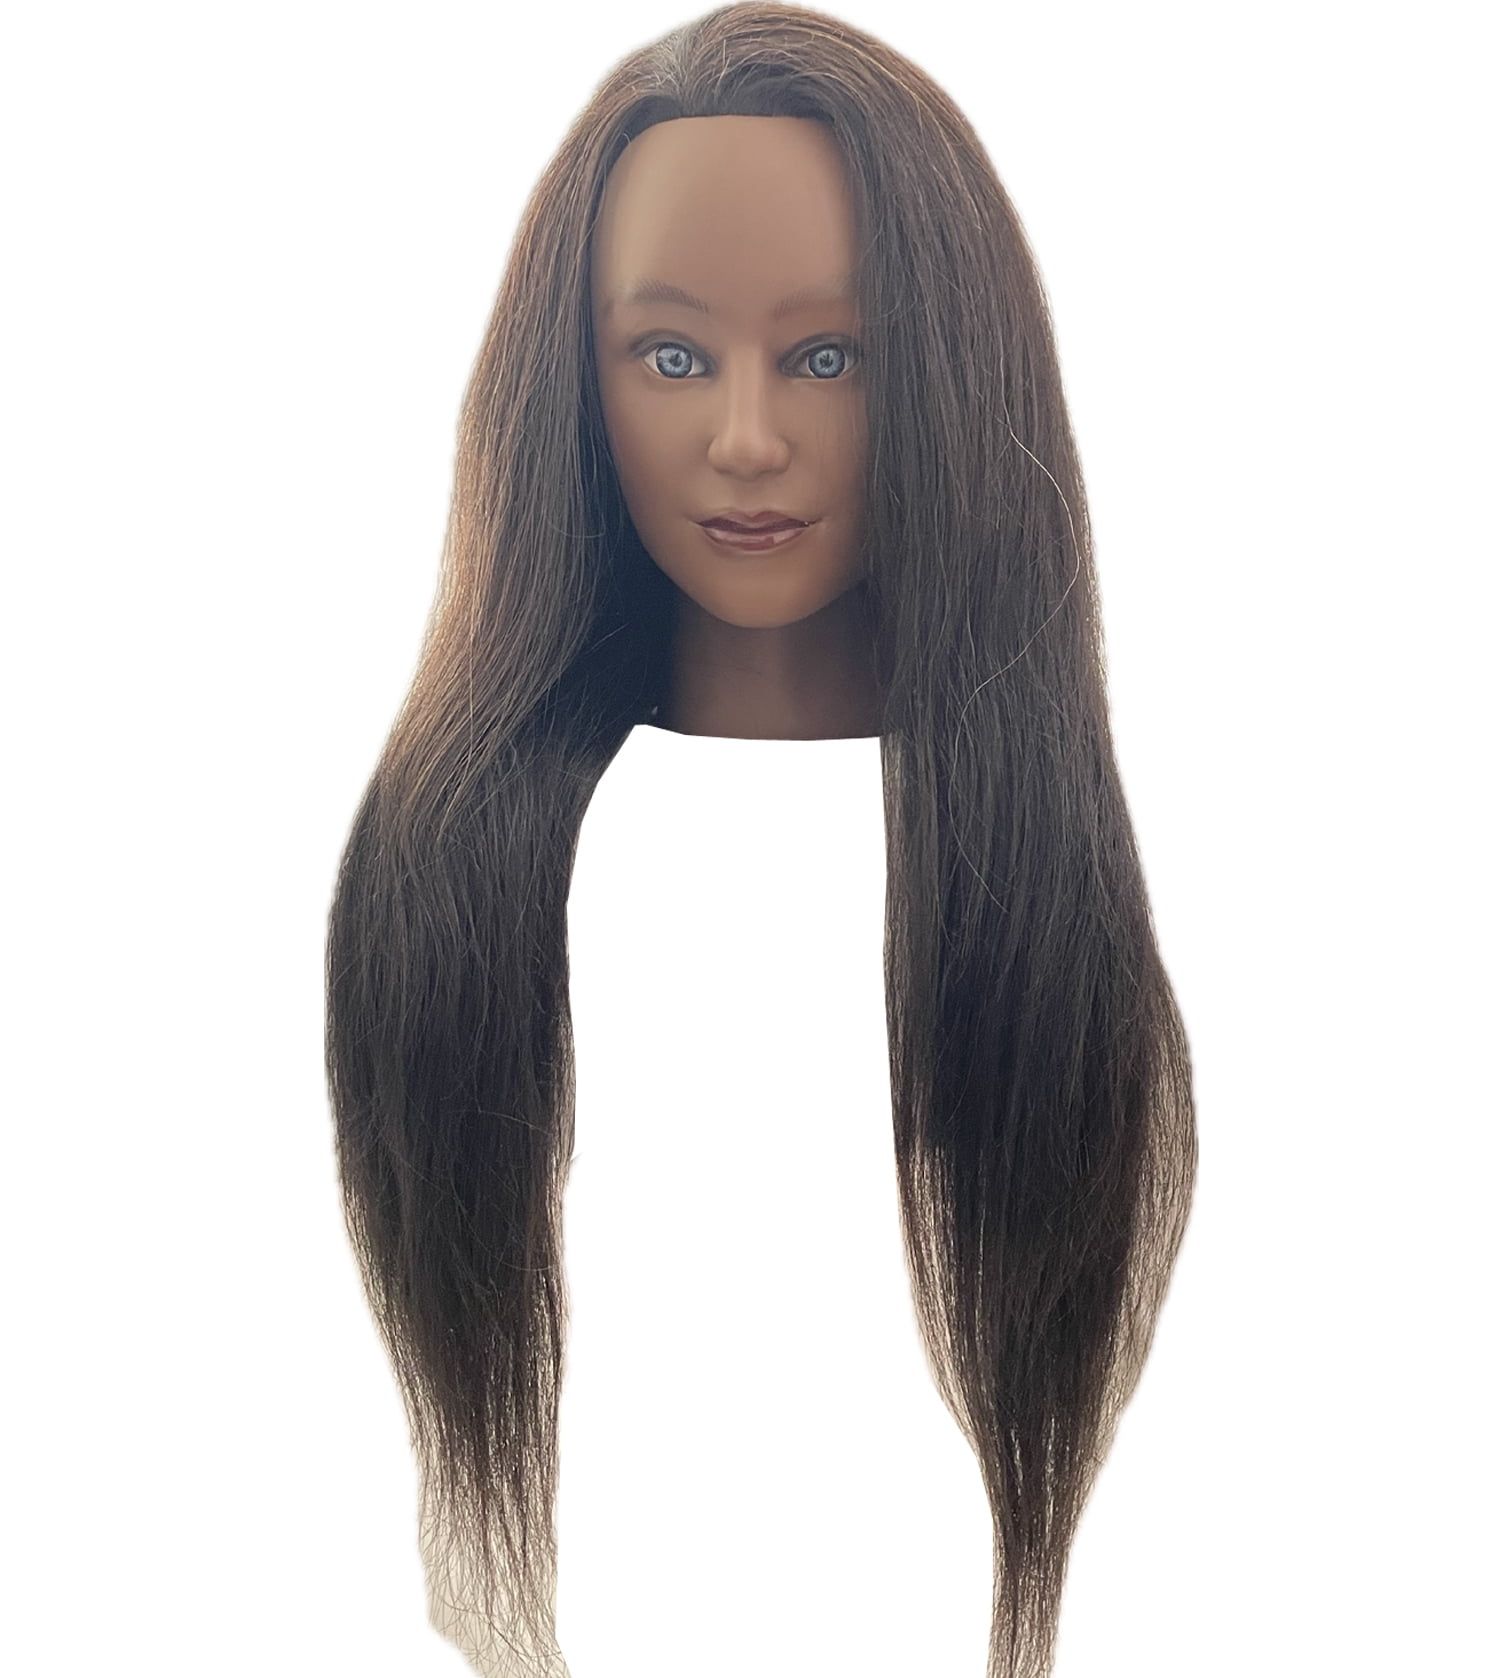 PerfeclanabMY] Hair Mannequin Doll Head, Synthetic Fiber Long Hair